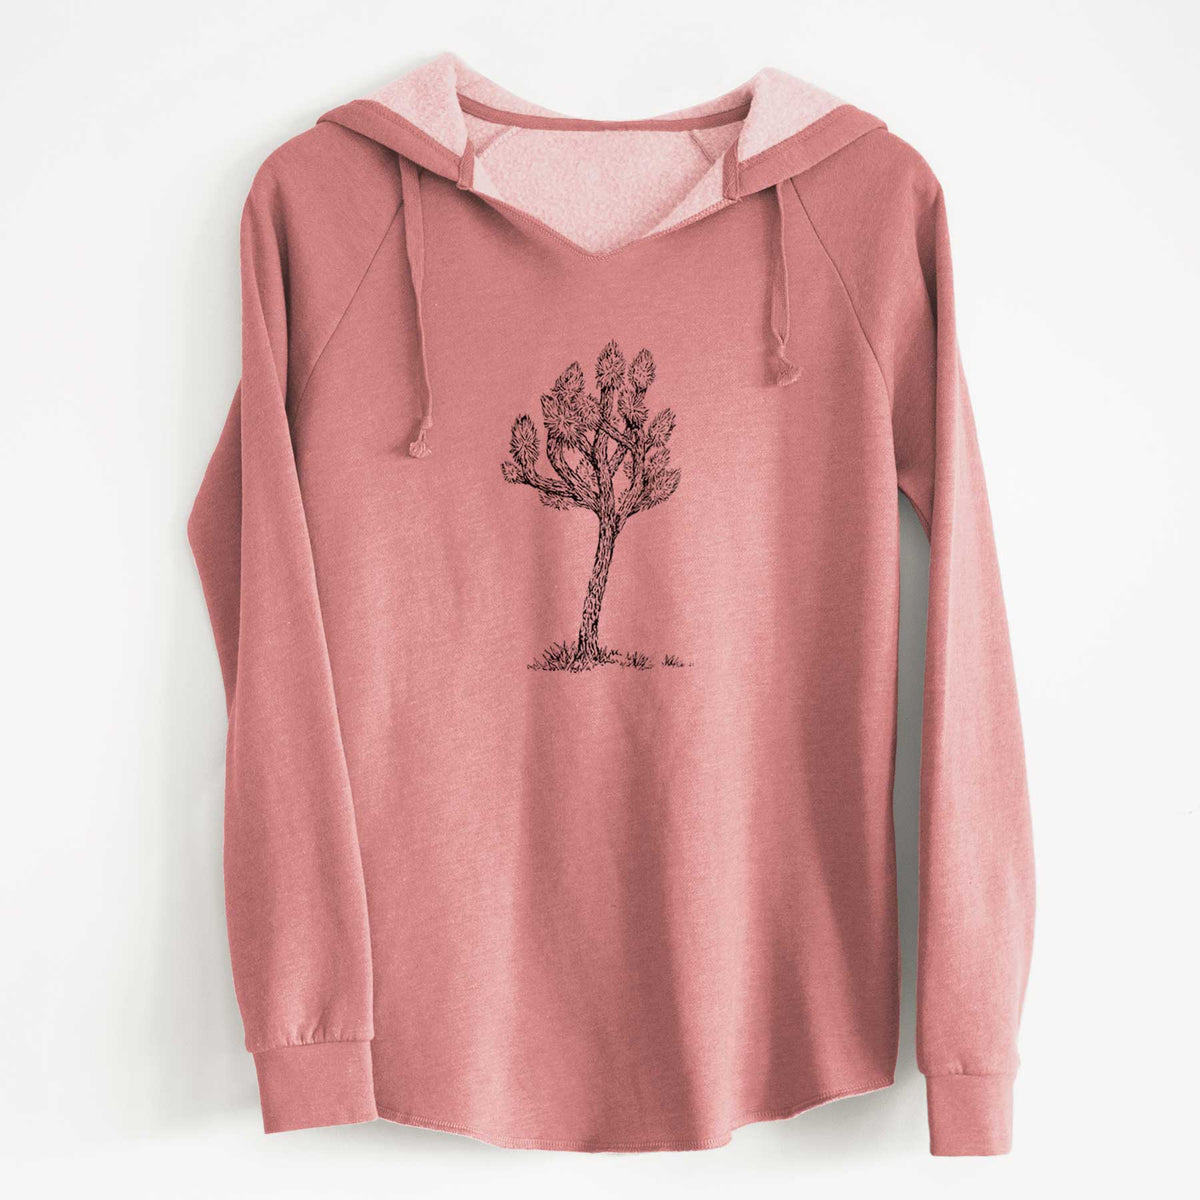 Yucca brevifolia - Joshua Tree - Cali Wave Hooded Sweatshirt